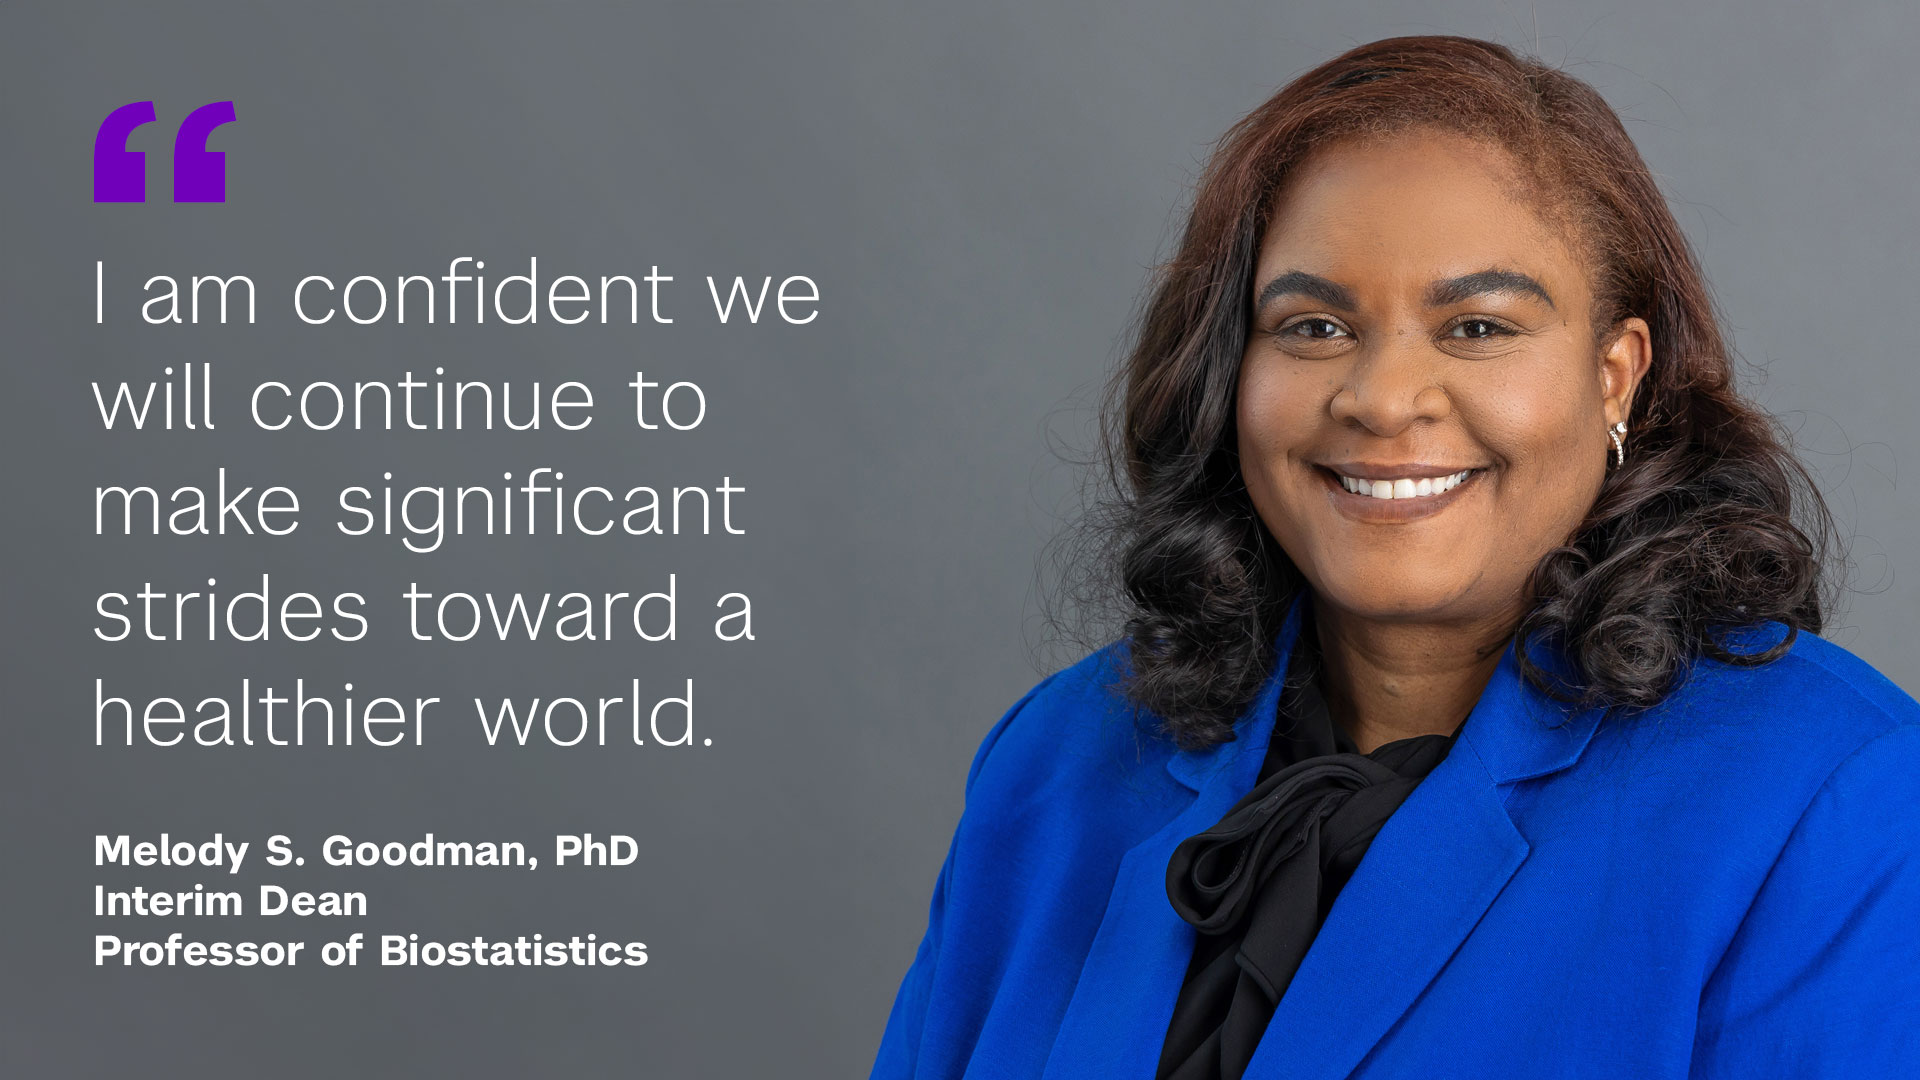 "I am confident we will continue to make significant strides toward a healthier world" Melody S. Goodman, PhD Interim Dean Professor of Biostatistics